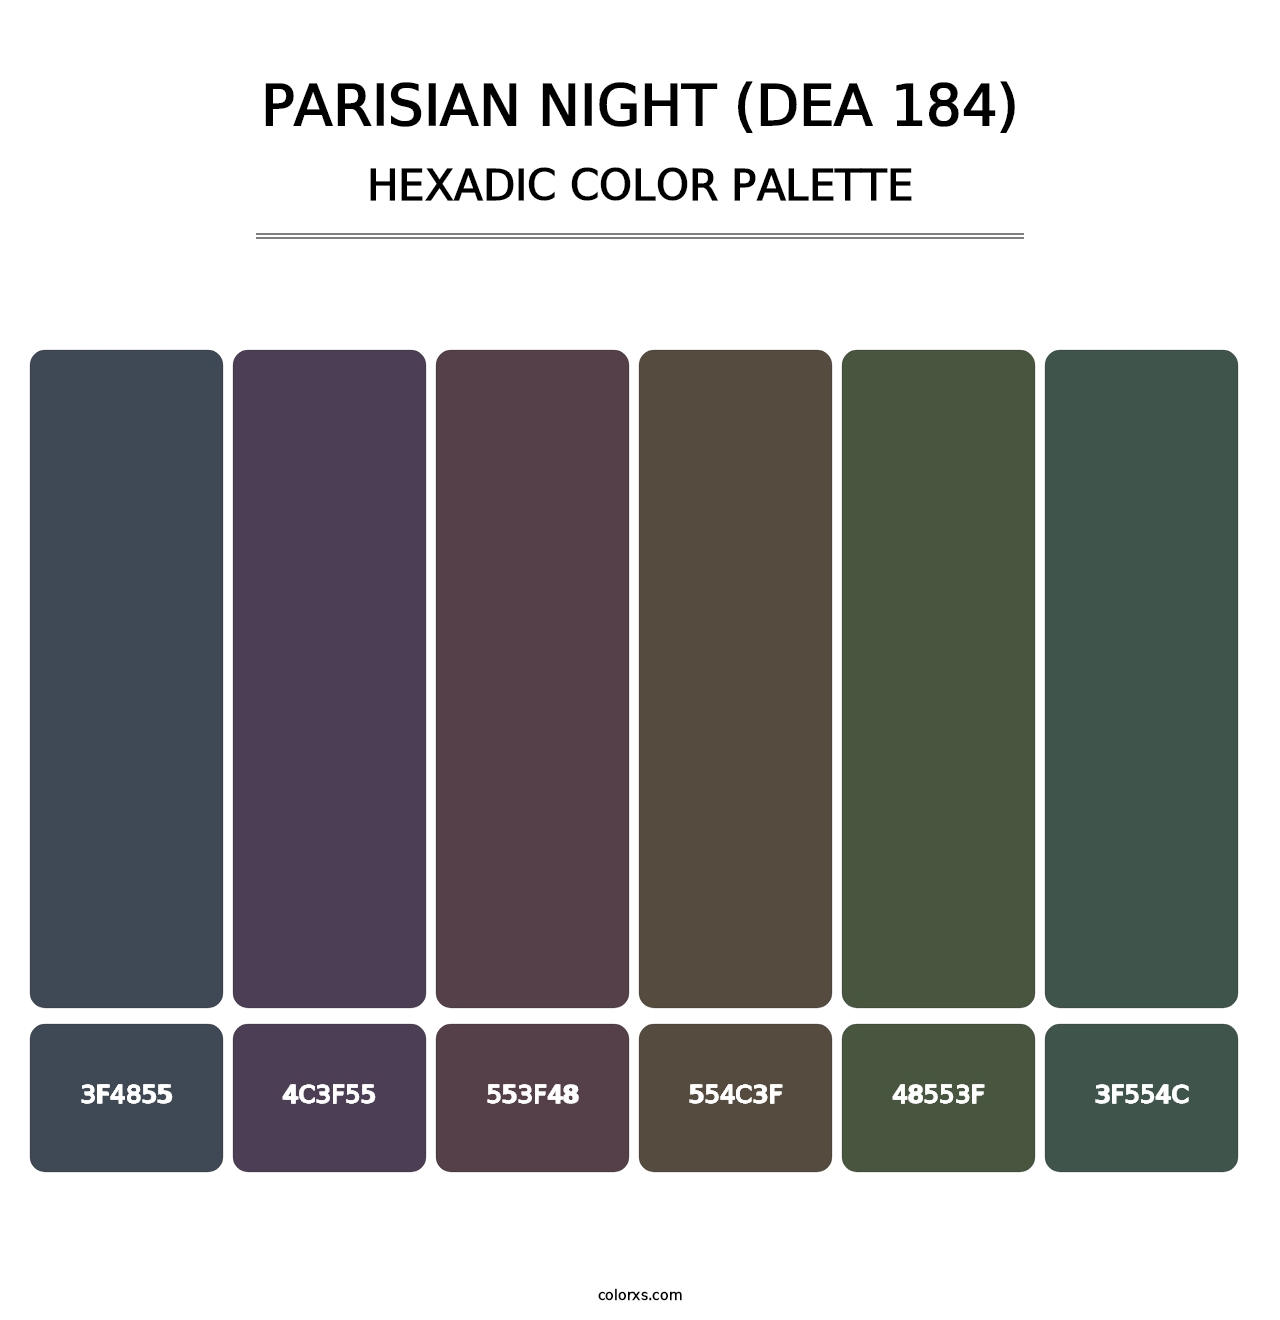 Parisian Night (DEA 184) - Hexadic Color Palette